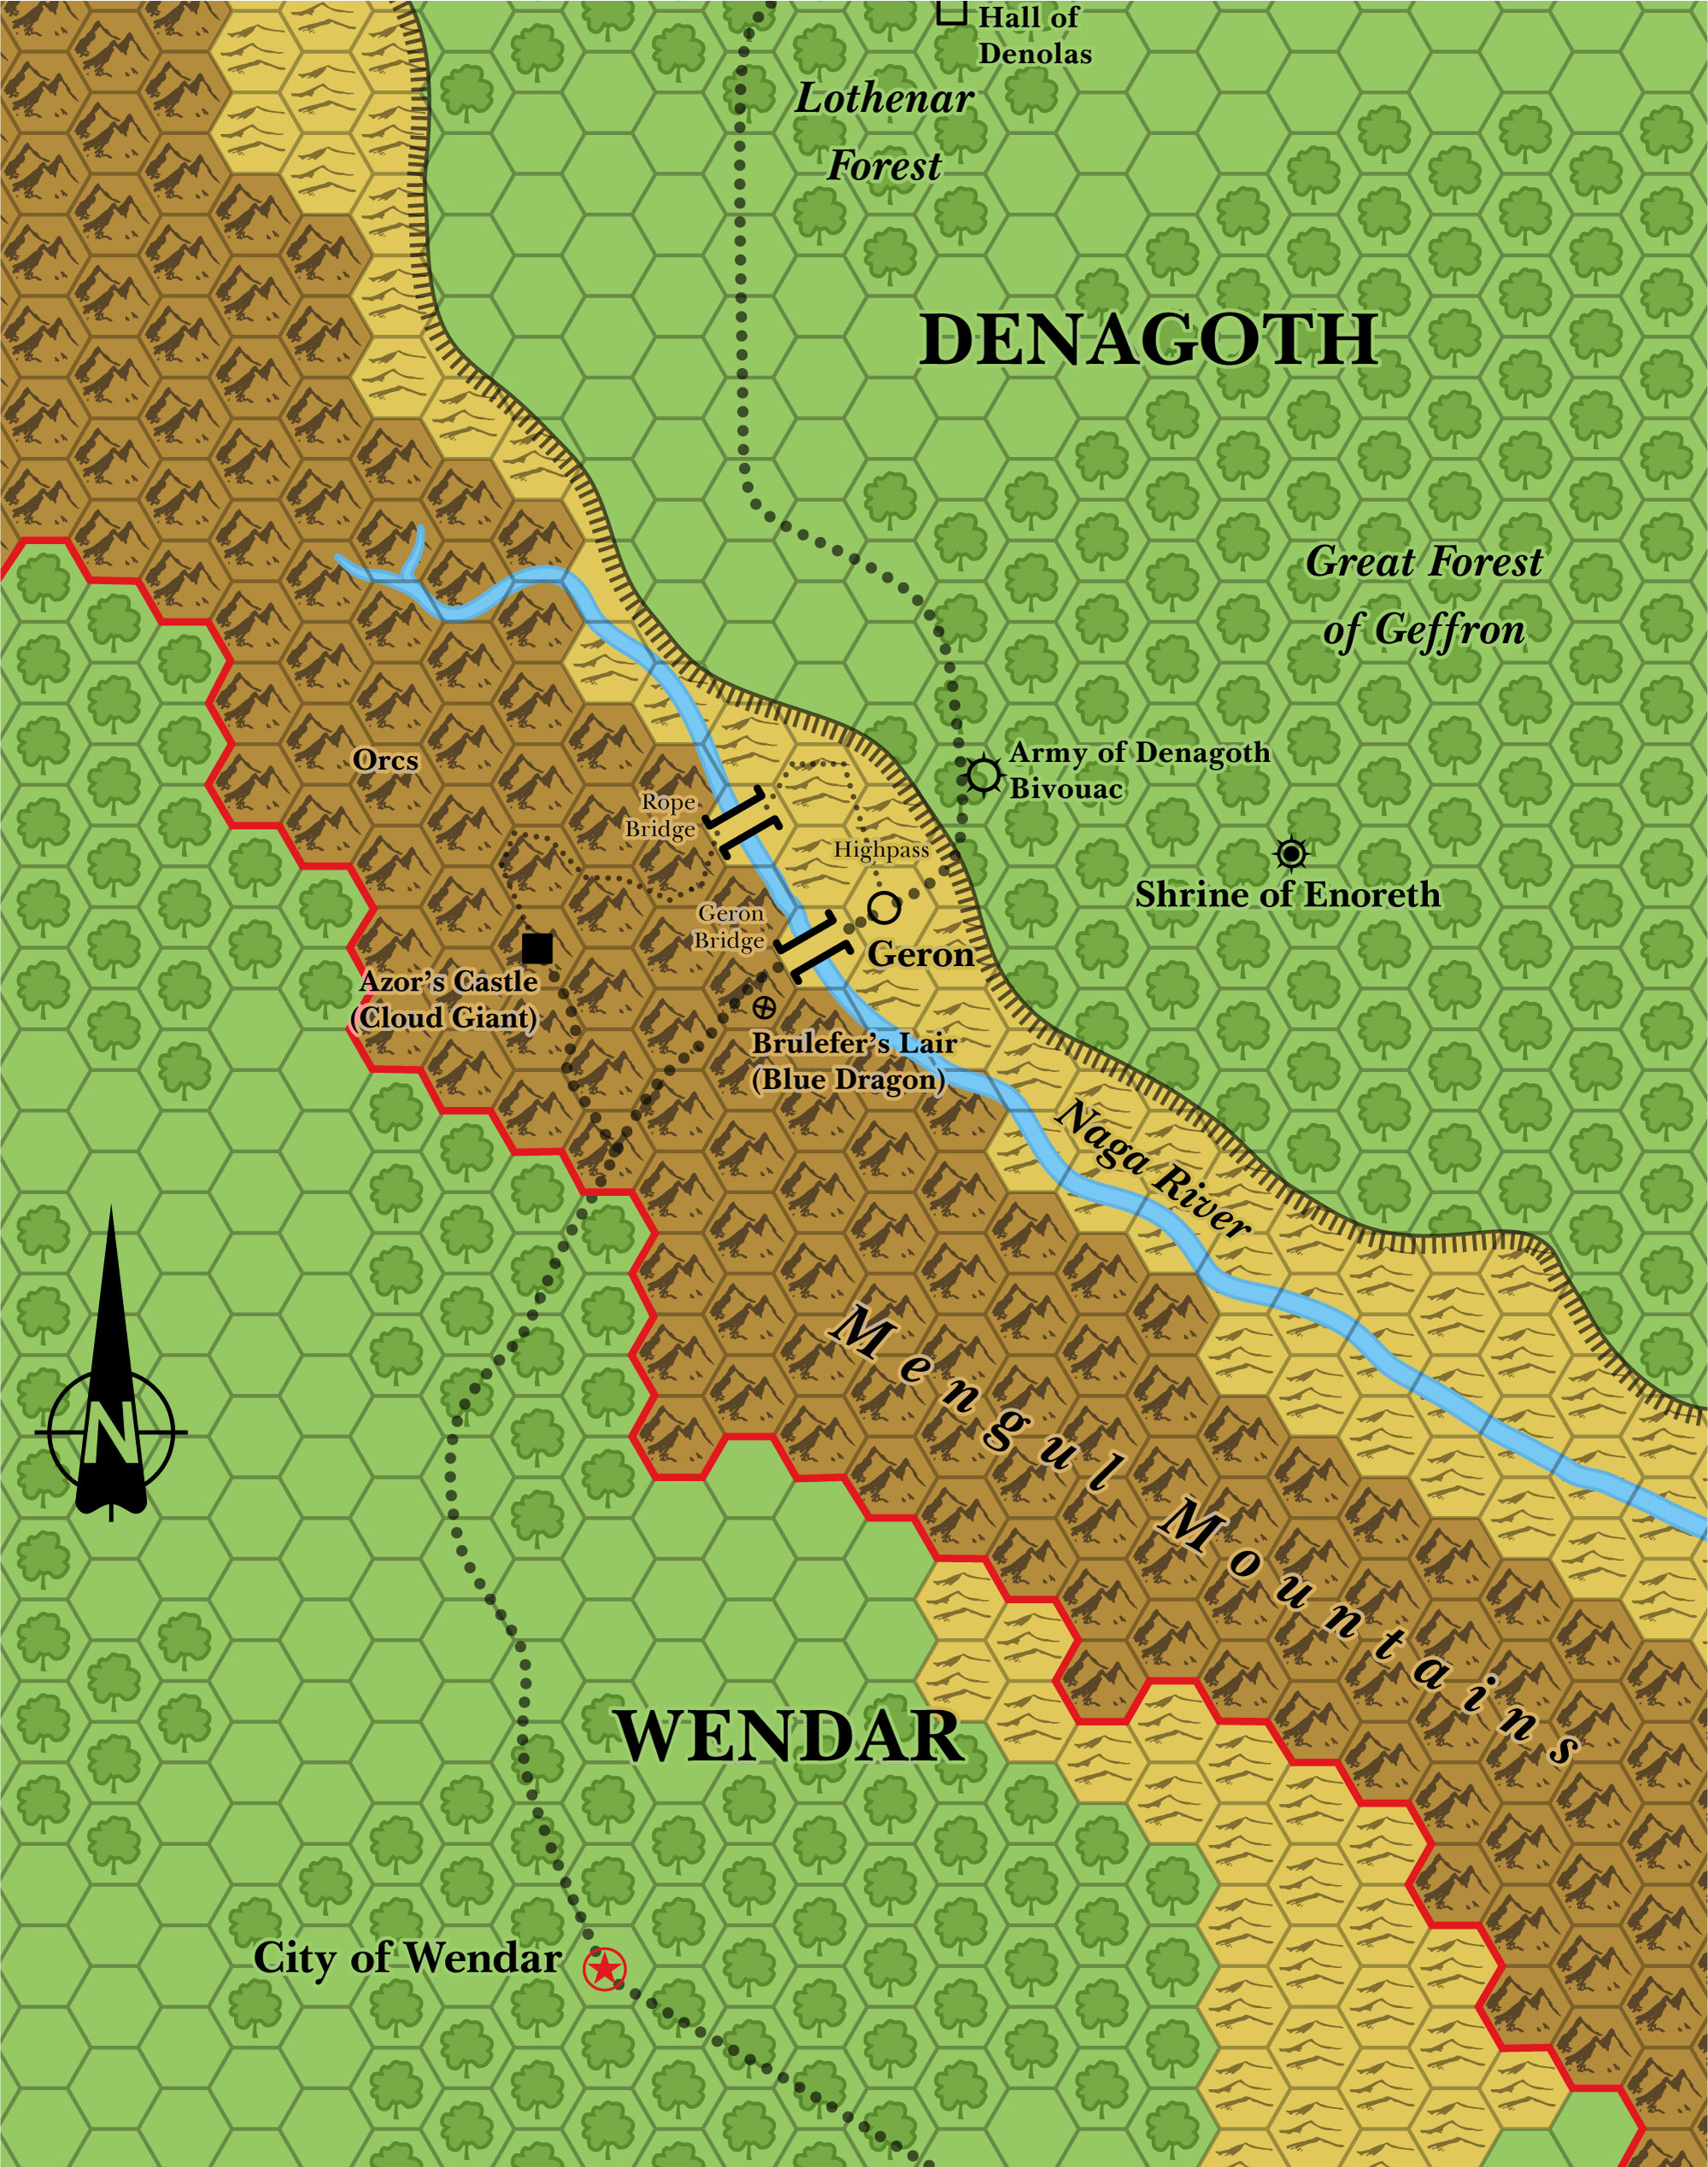 Trail to Denagoth, 12 miles per hex (1986)